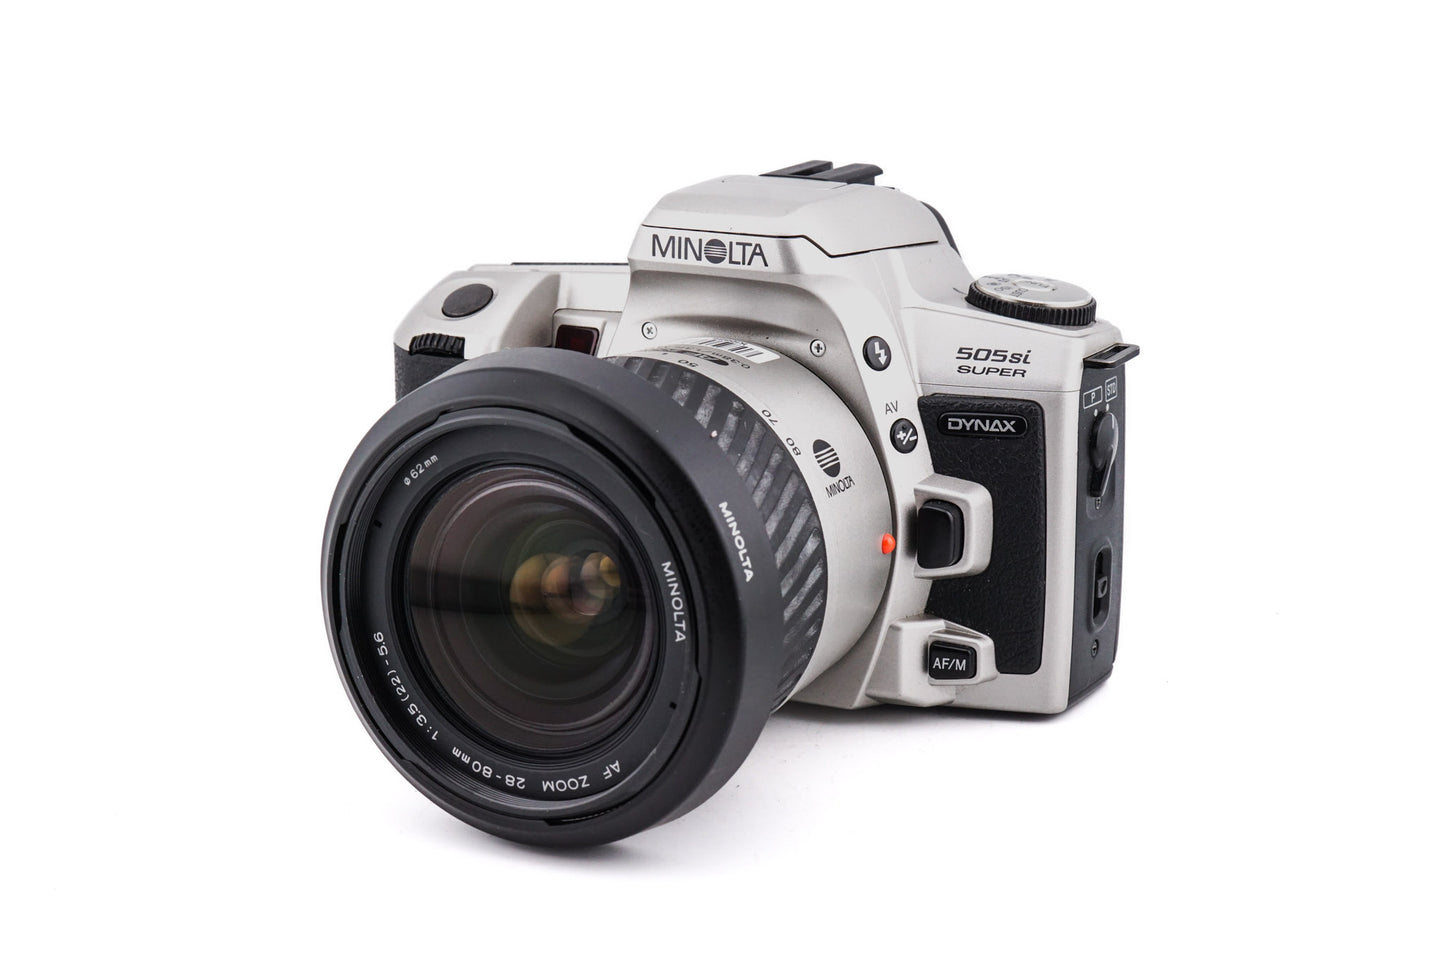 Minolta Dynax 505si Super - Camera